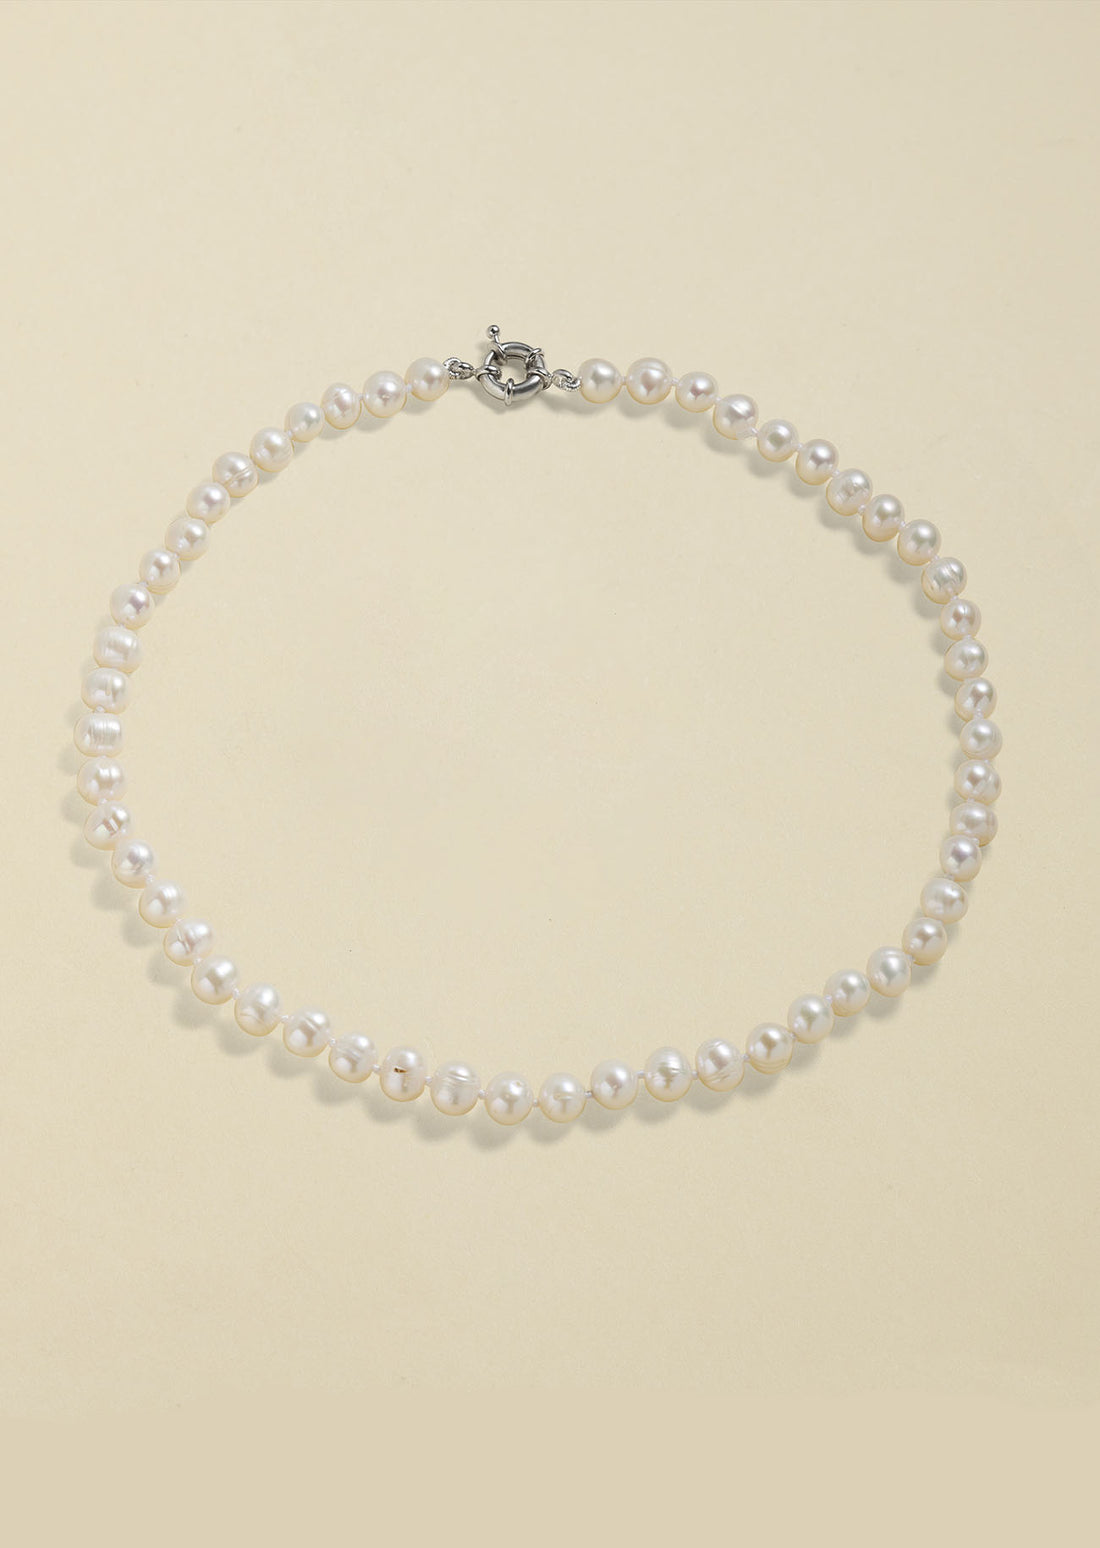 Pearl choker white pearls 8mm diameter